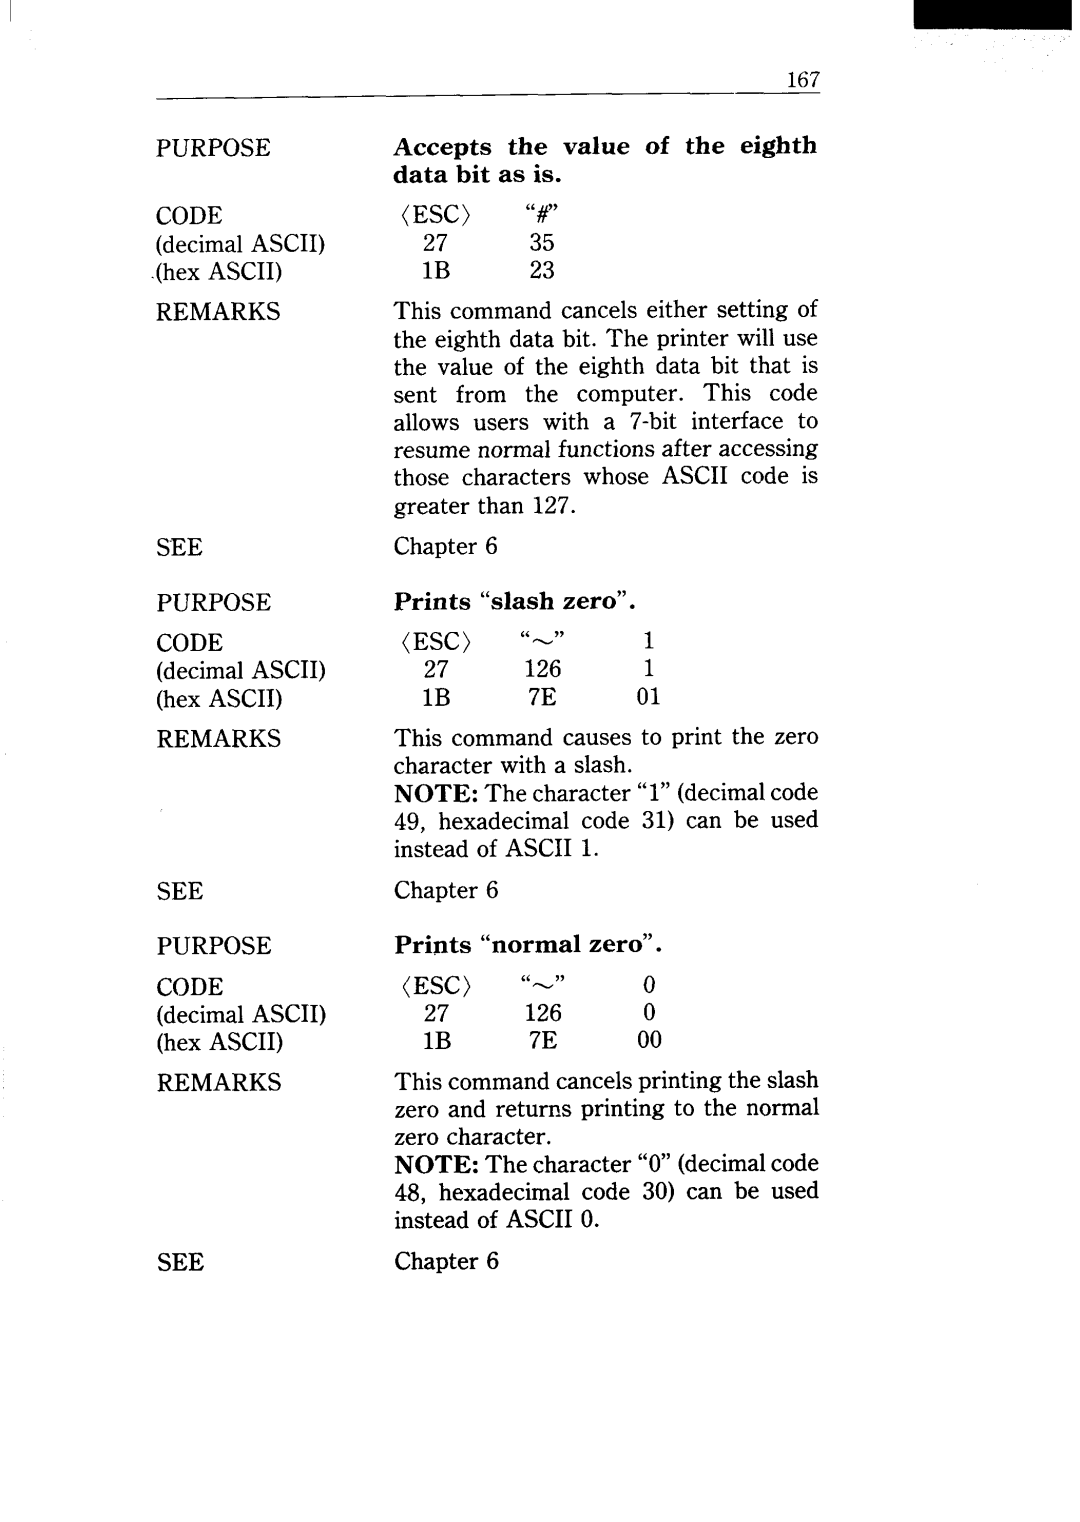 Star Micronics NX-15 user manual PURPOSE CODE decimal ASCII hex ASCII REMARKS SEE PURPOSE 